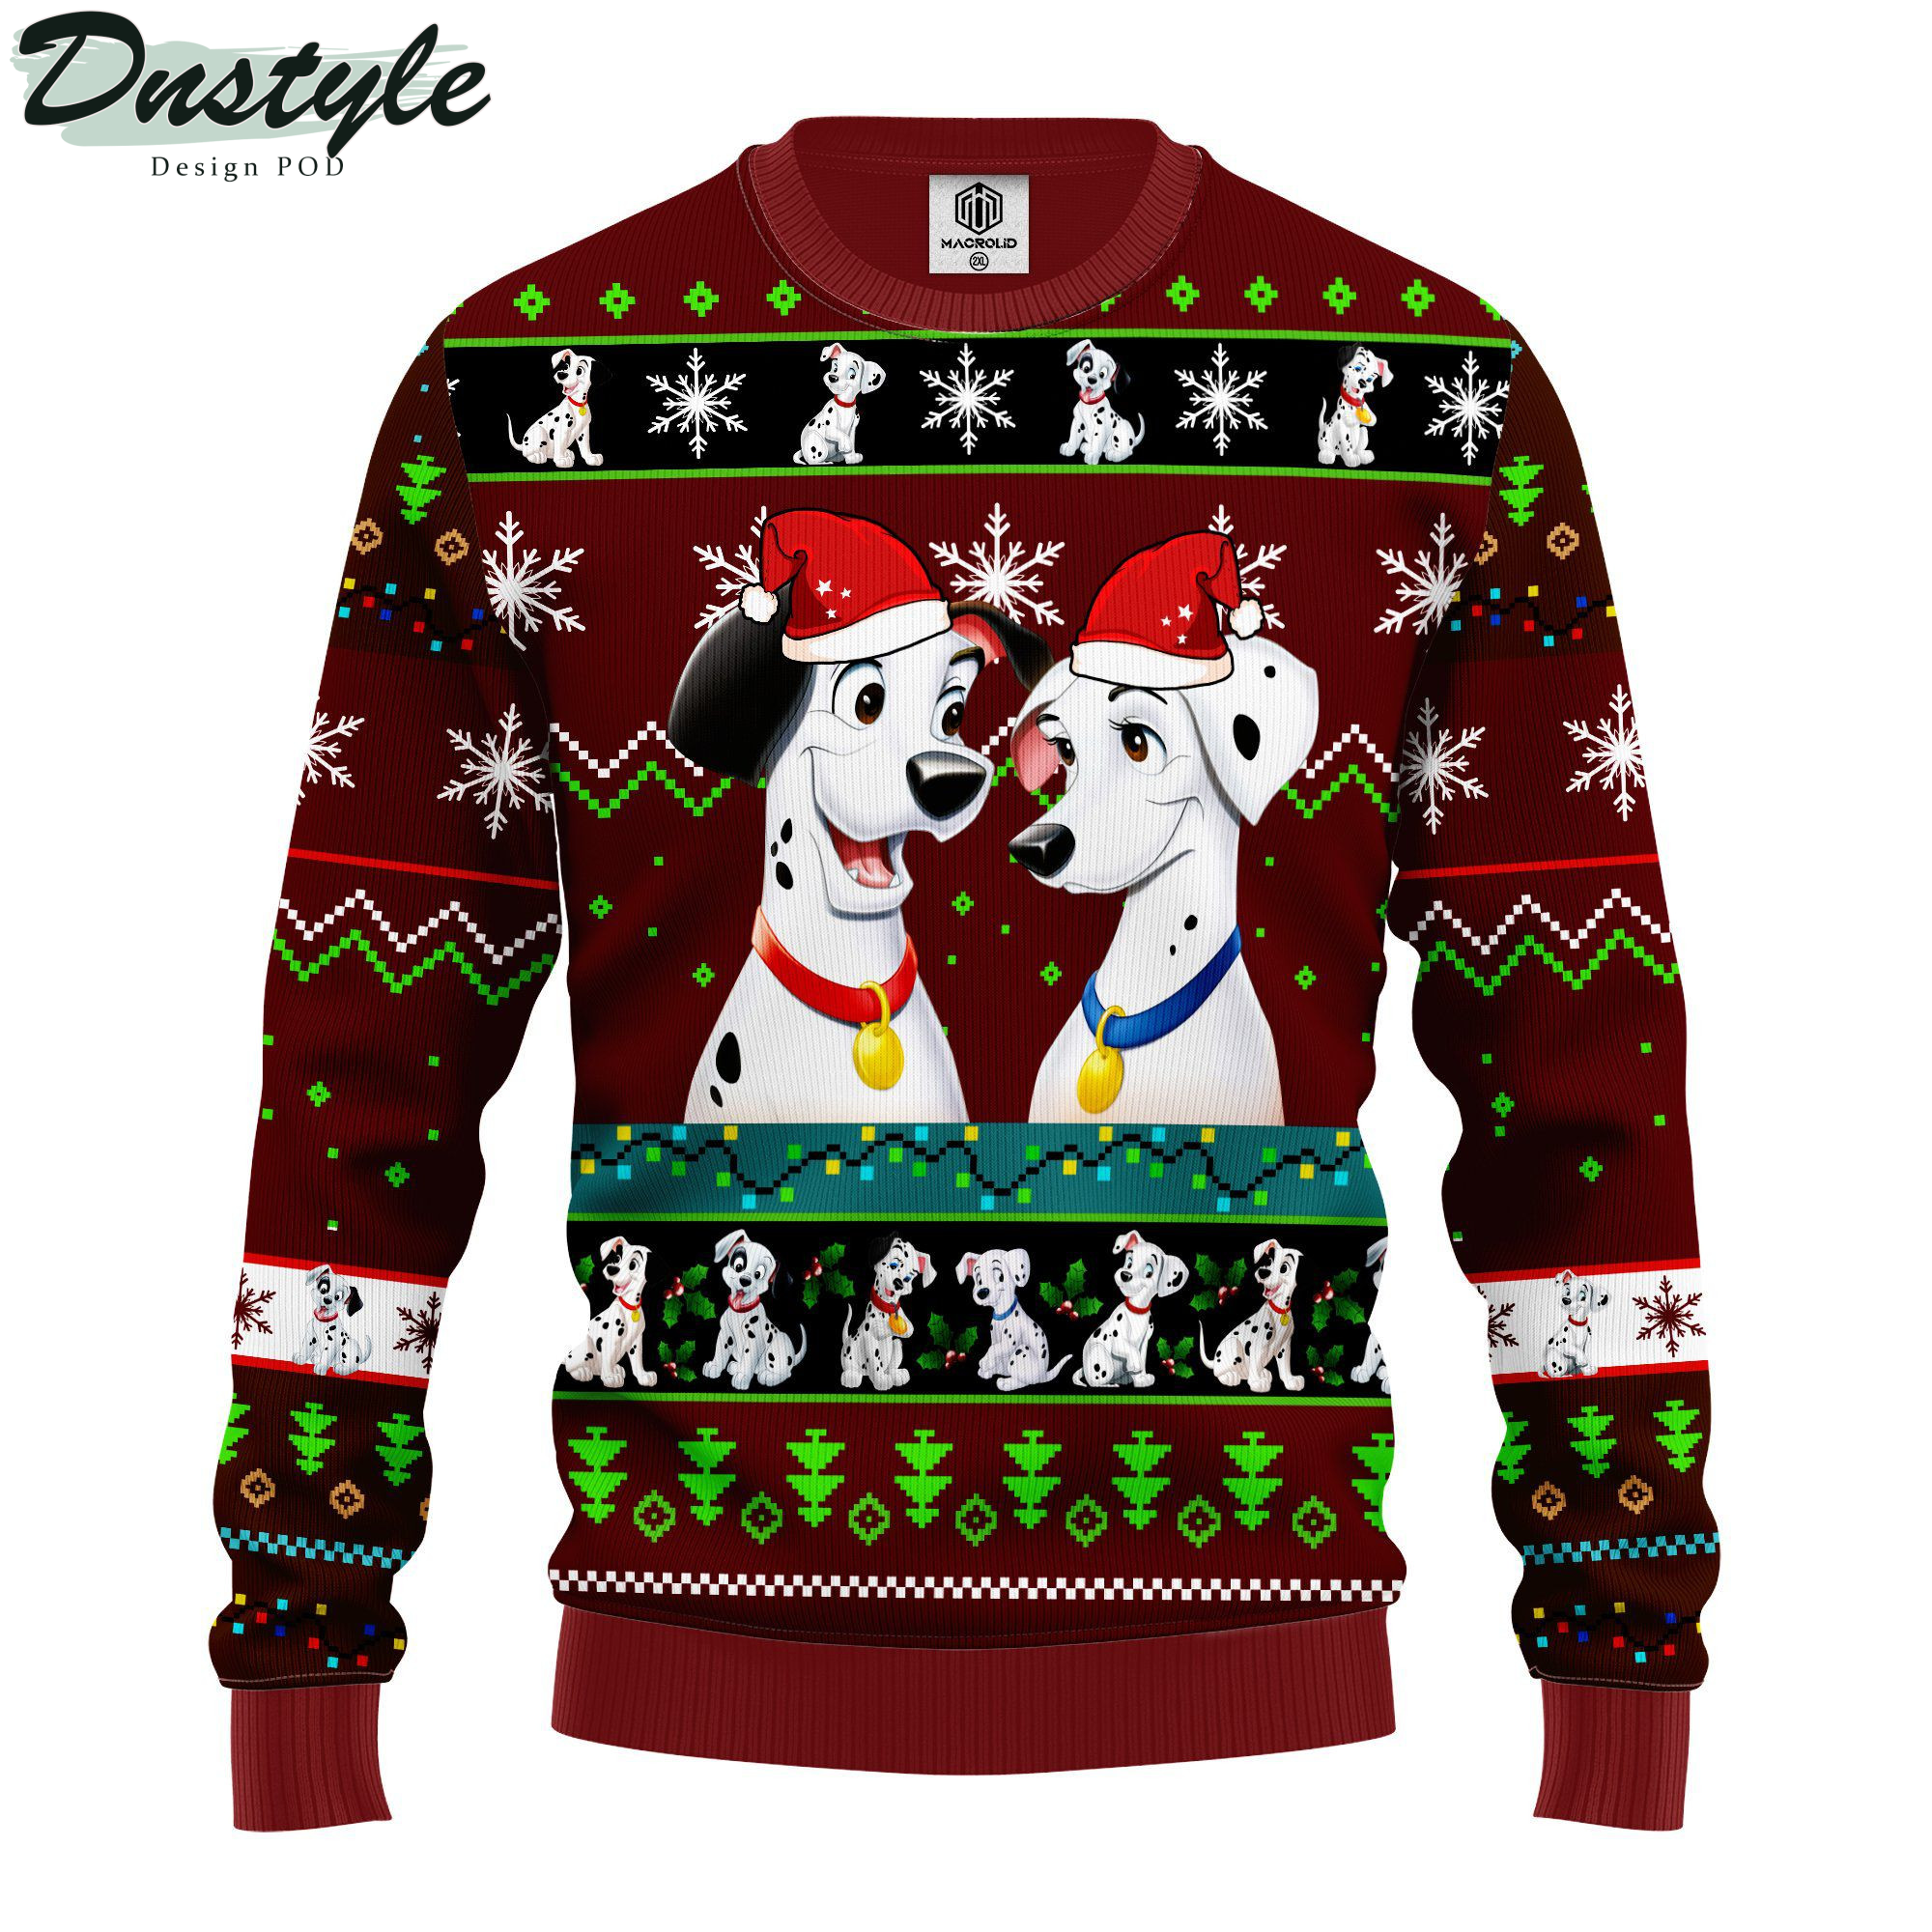 101 Dalmatians Cartoon Ugly Christmas Sweater